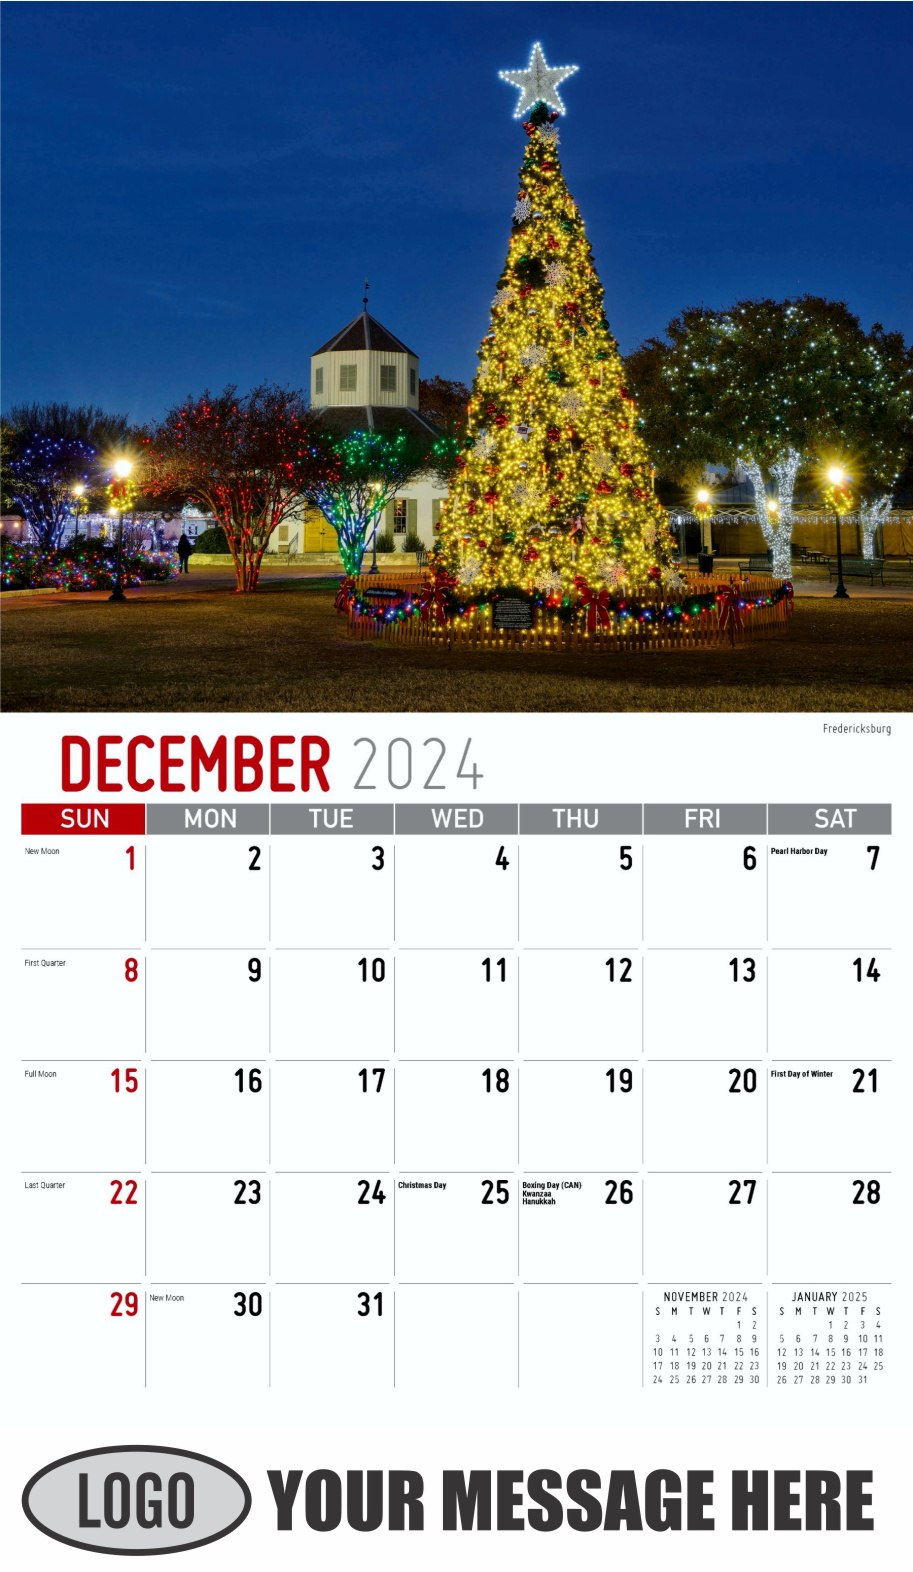 Scenes of Texas 2024 Business Advertising Calendar - December